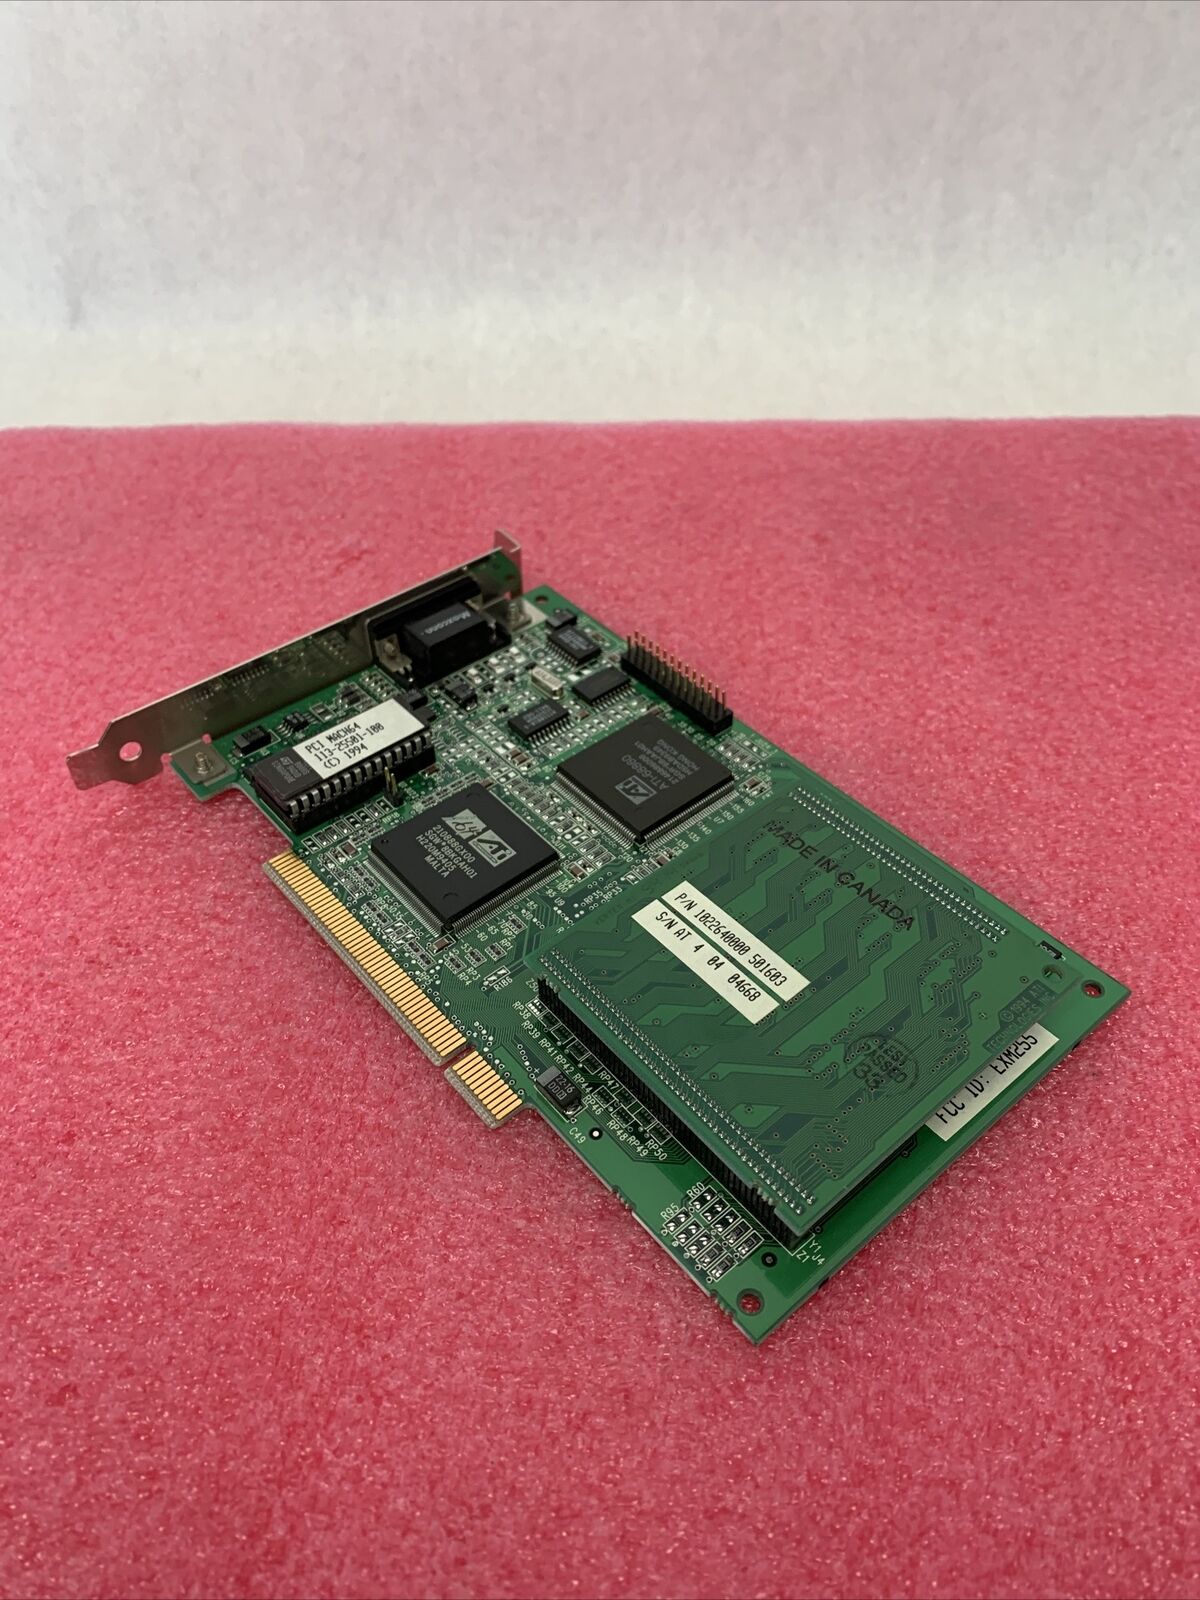 ATI PCI MACH64 109-25500-10 Graphics Card w/ ATI 109-26400-00 2MB VRAM ADDON